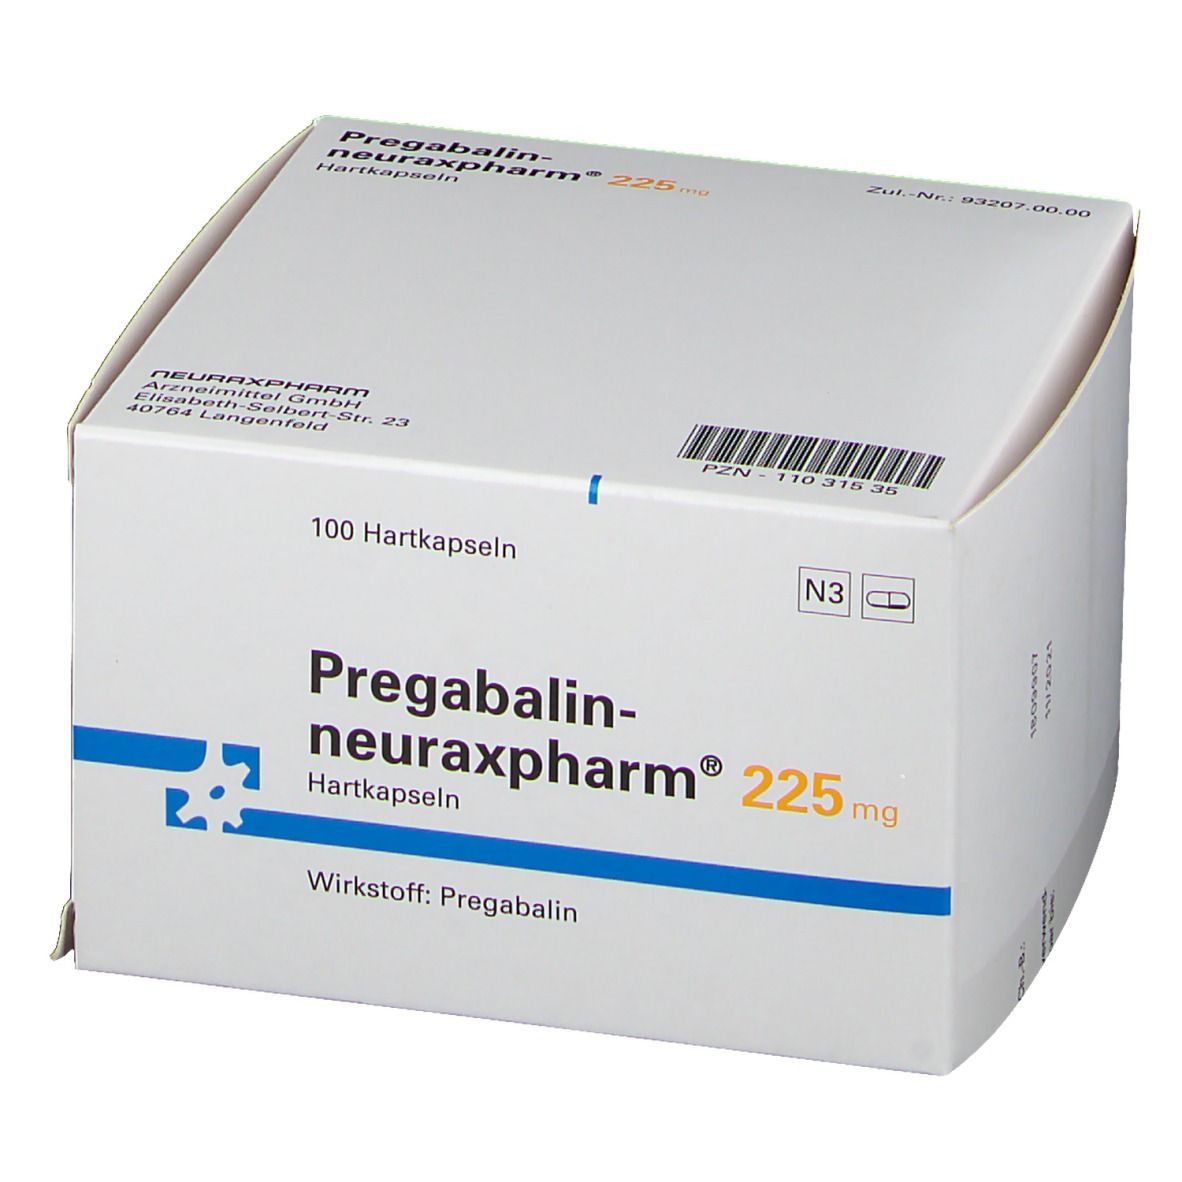 Pregabalin-neuraxpharm® 225 mg